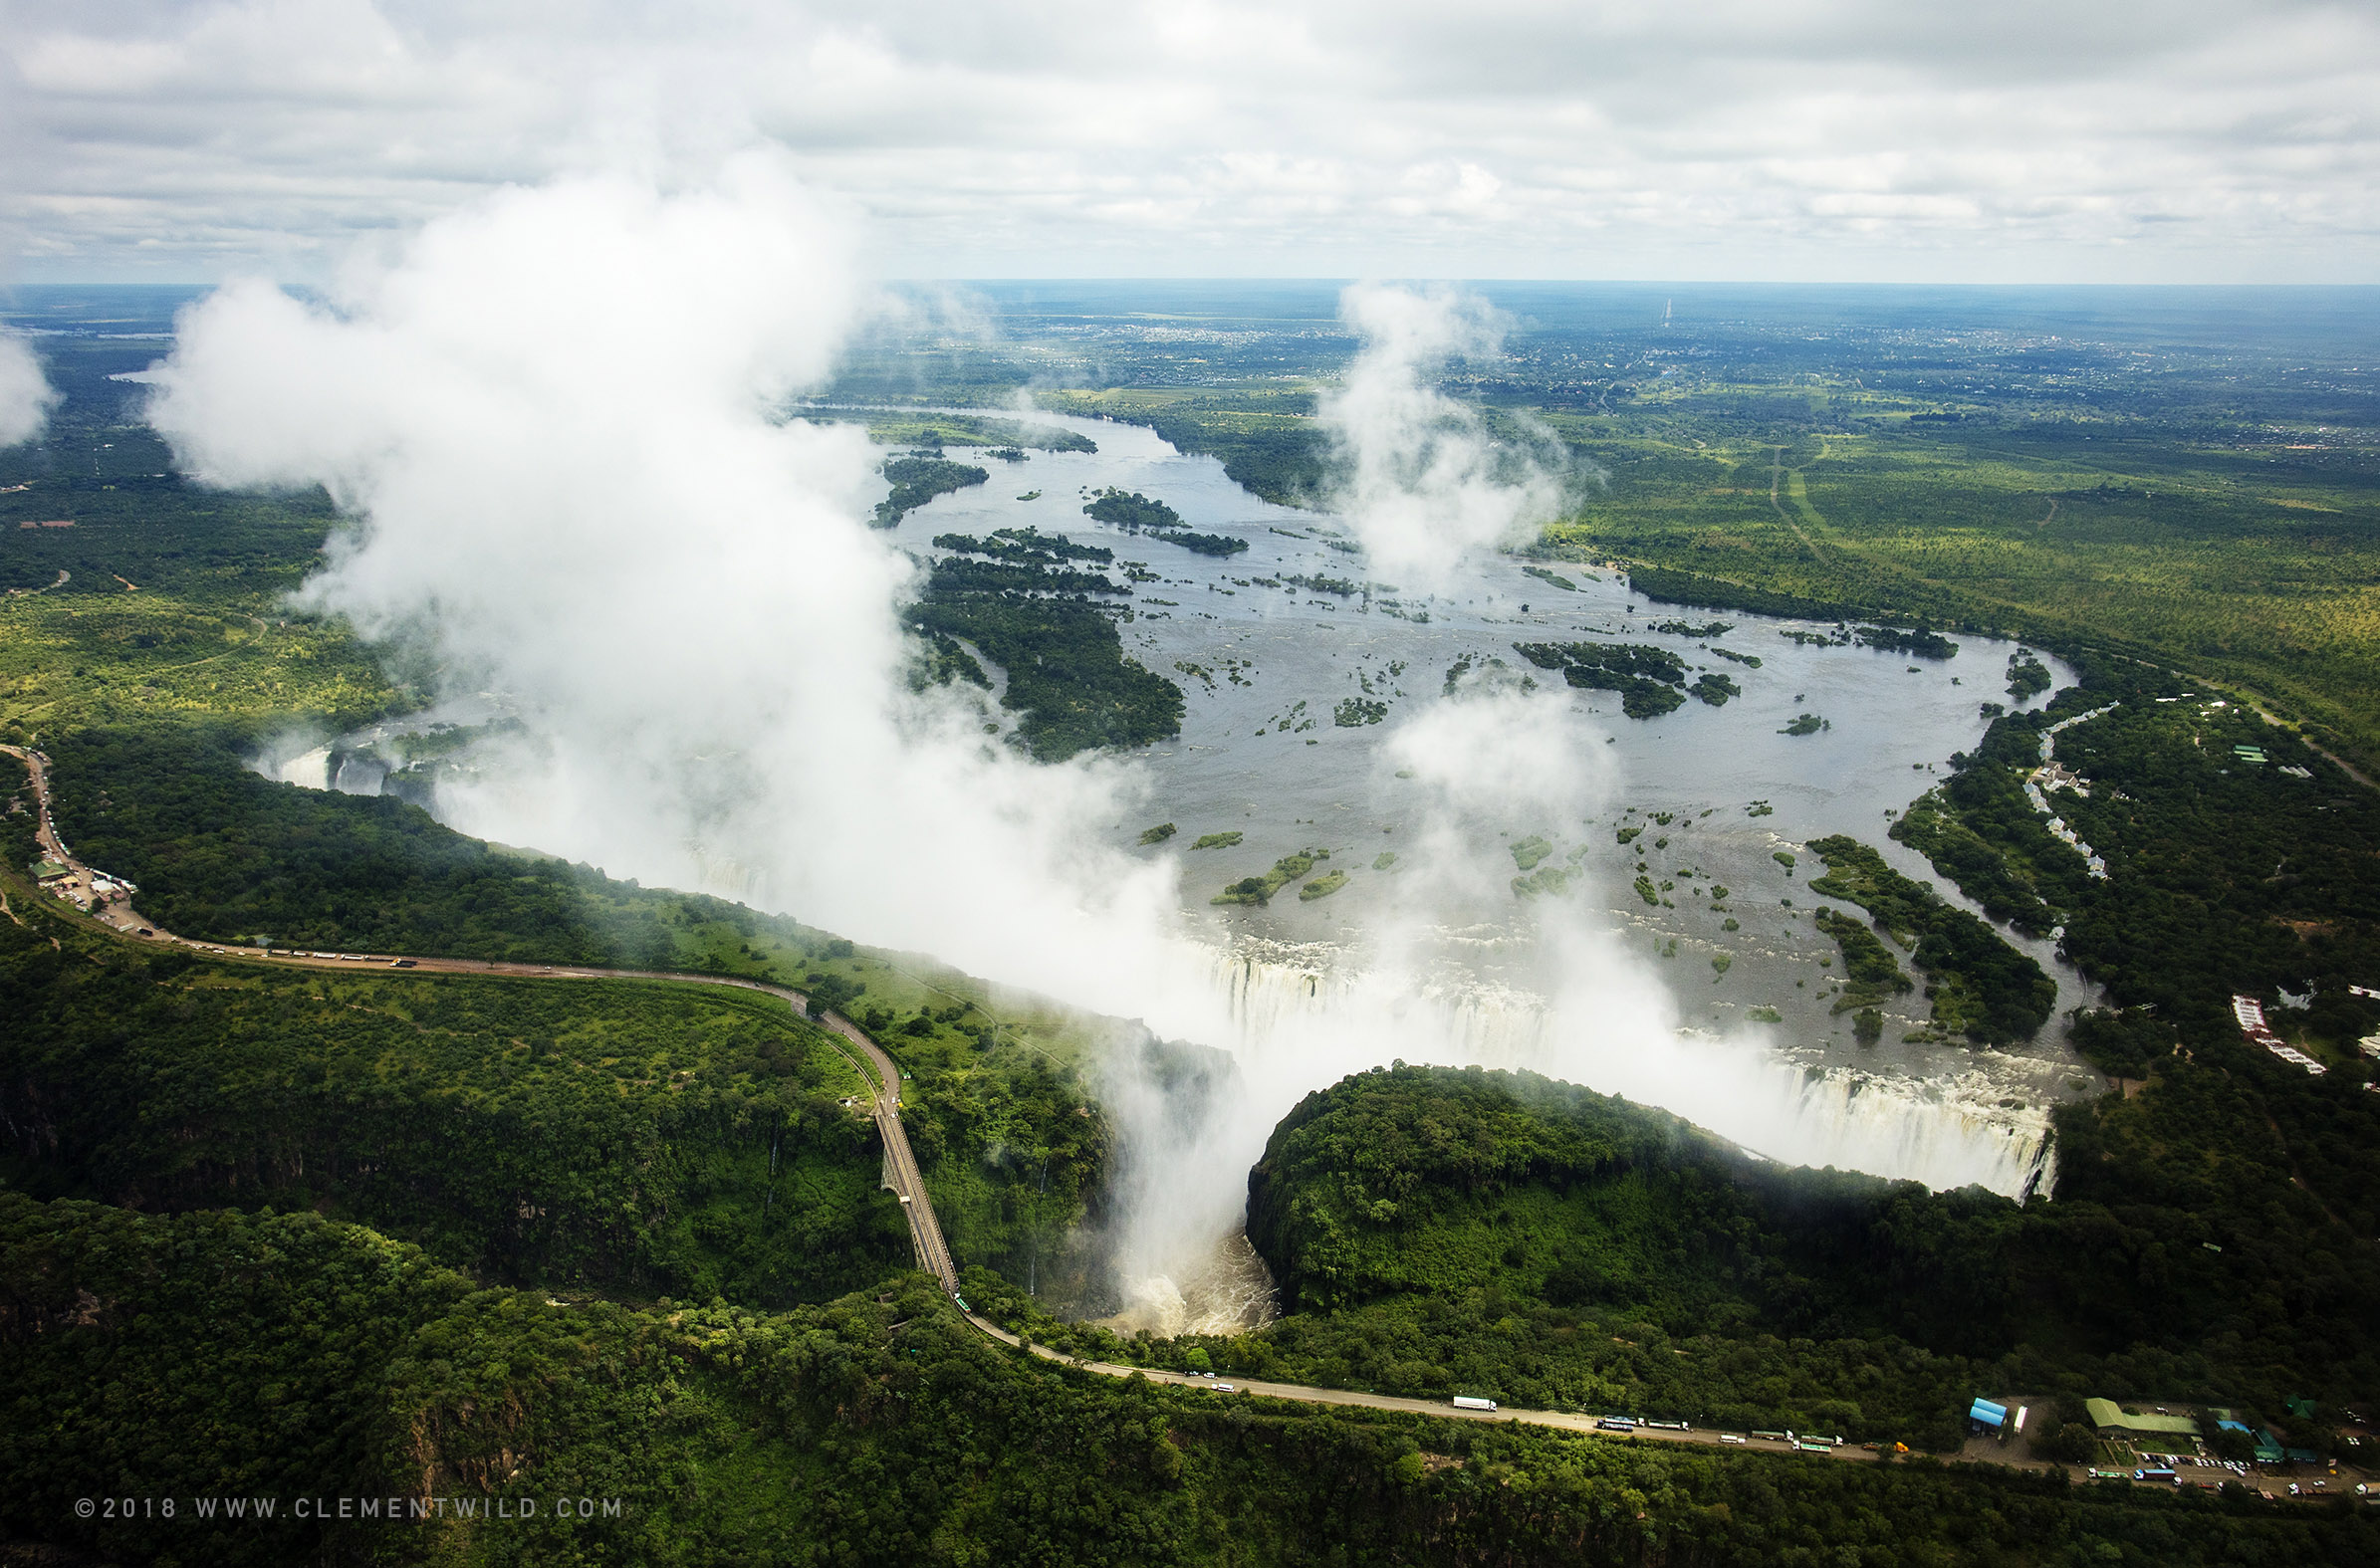 Victoria Falls on Zambezi River